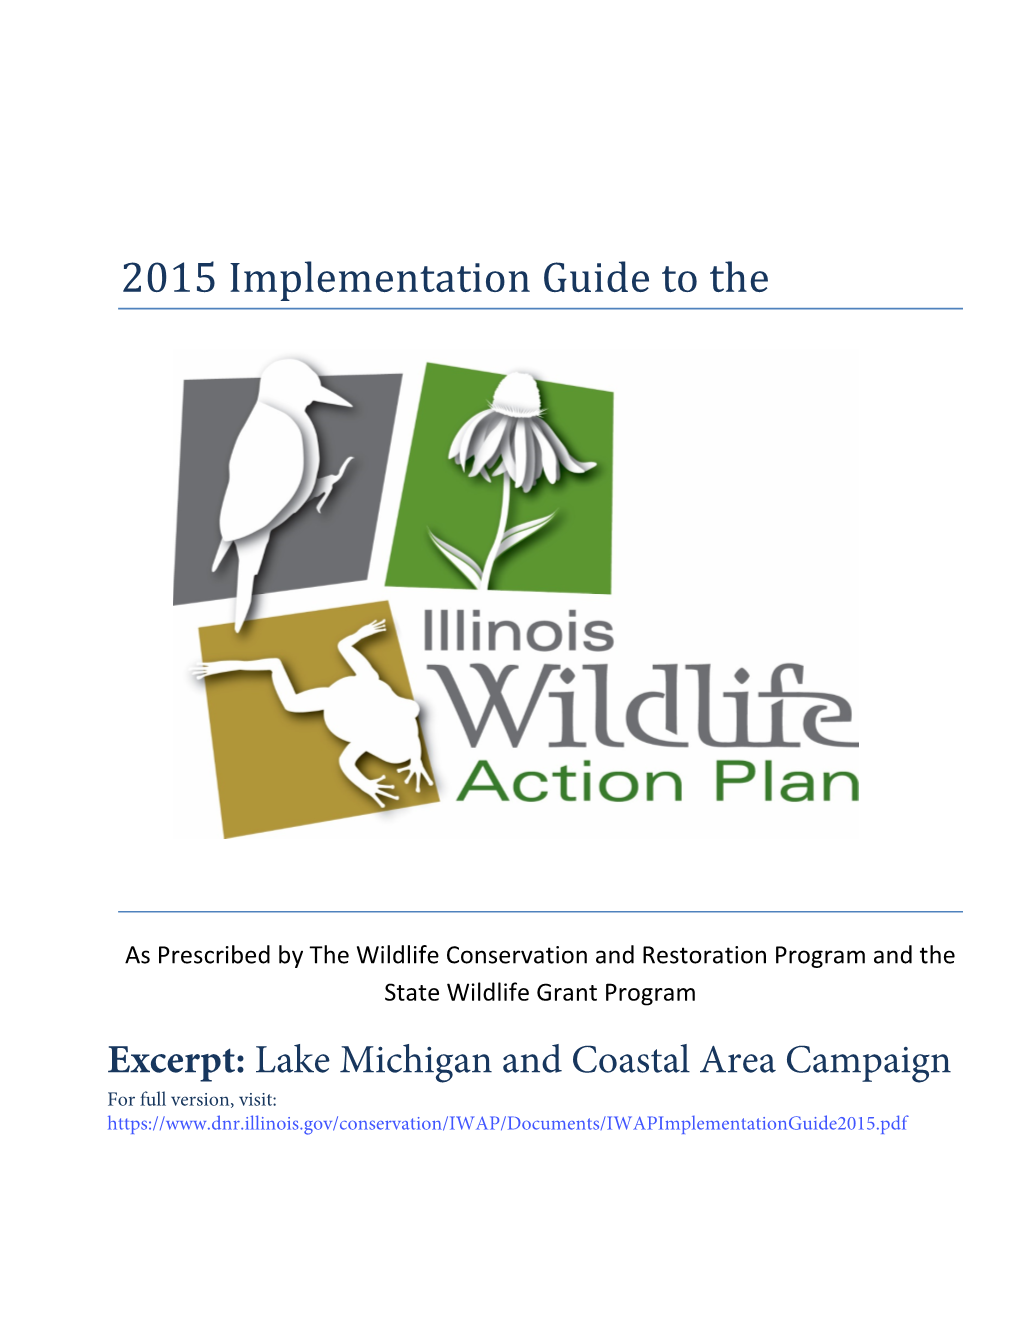 IWAP/Documents/Iwapimplementationguide2015.Pdf Lake Michigan and Coastal Area Campaign